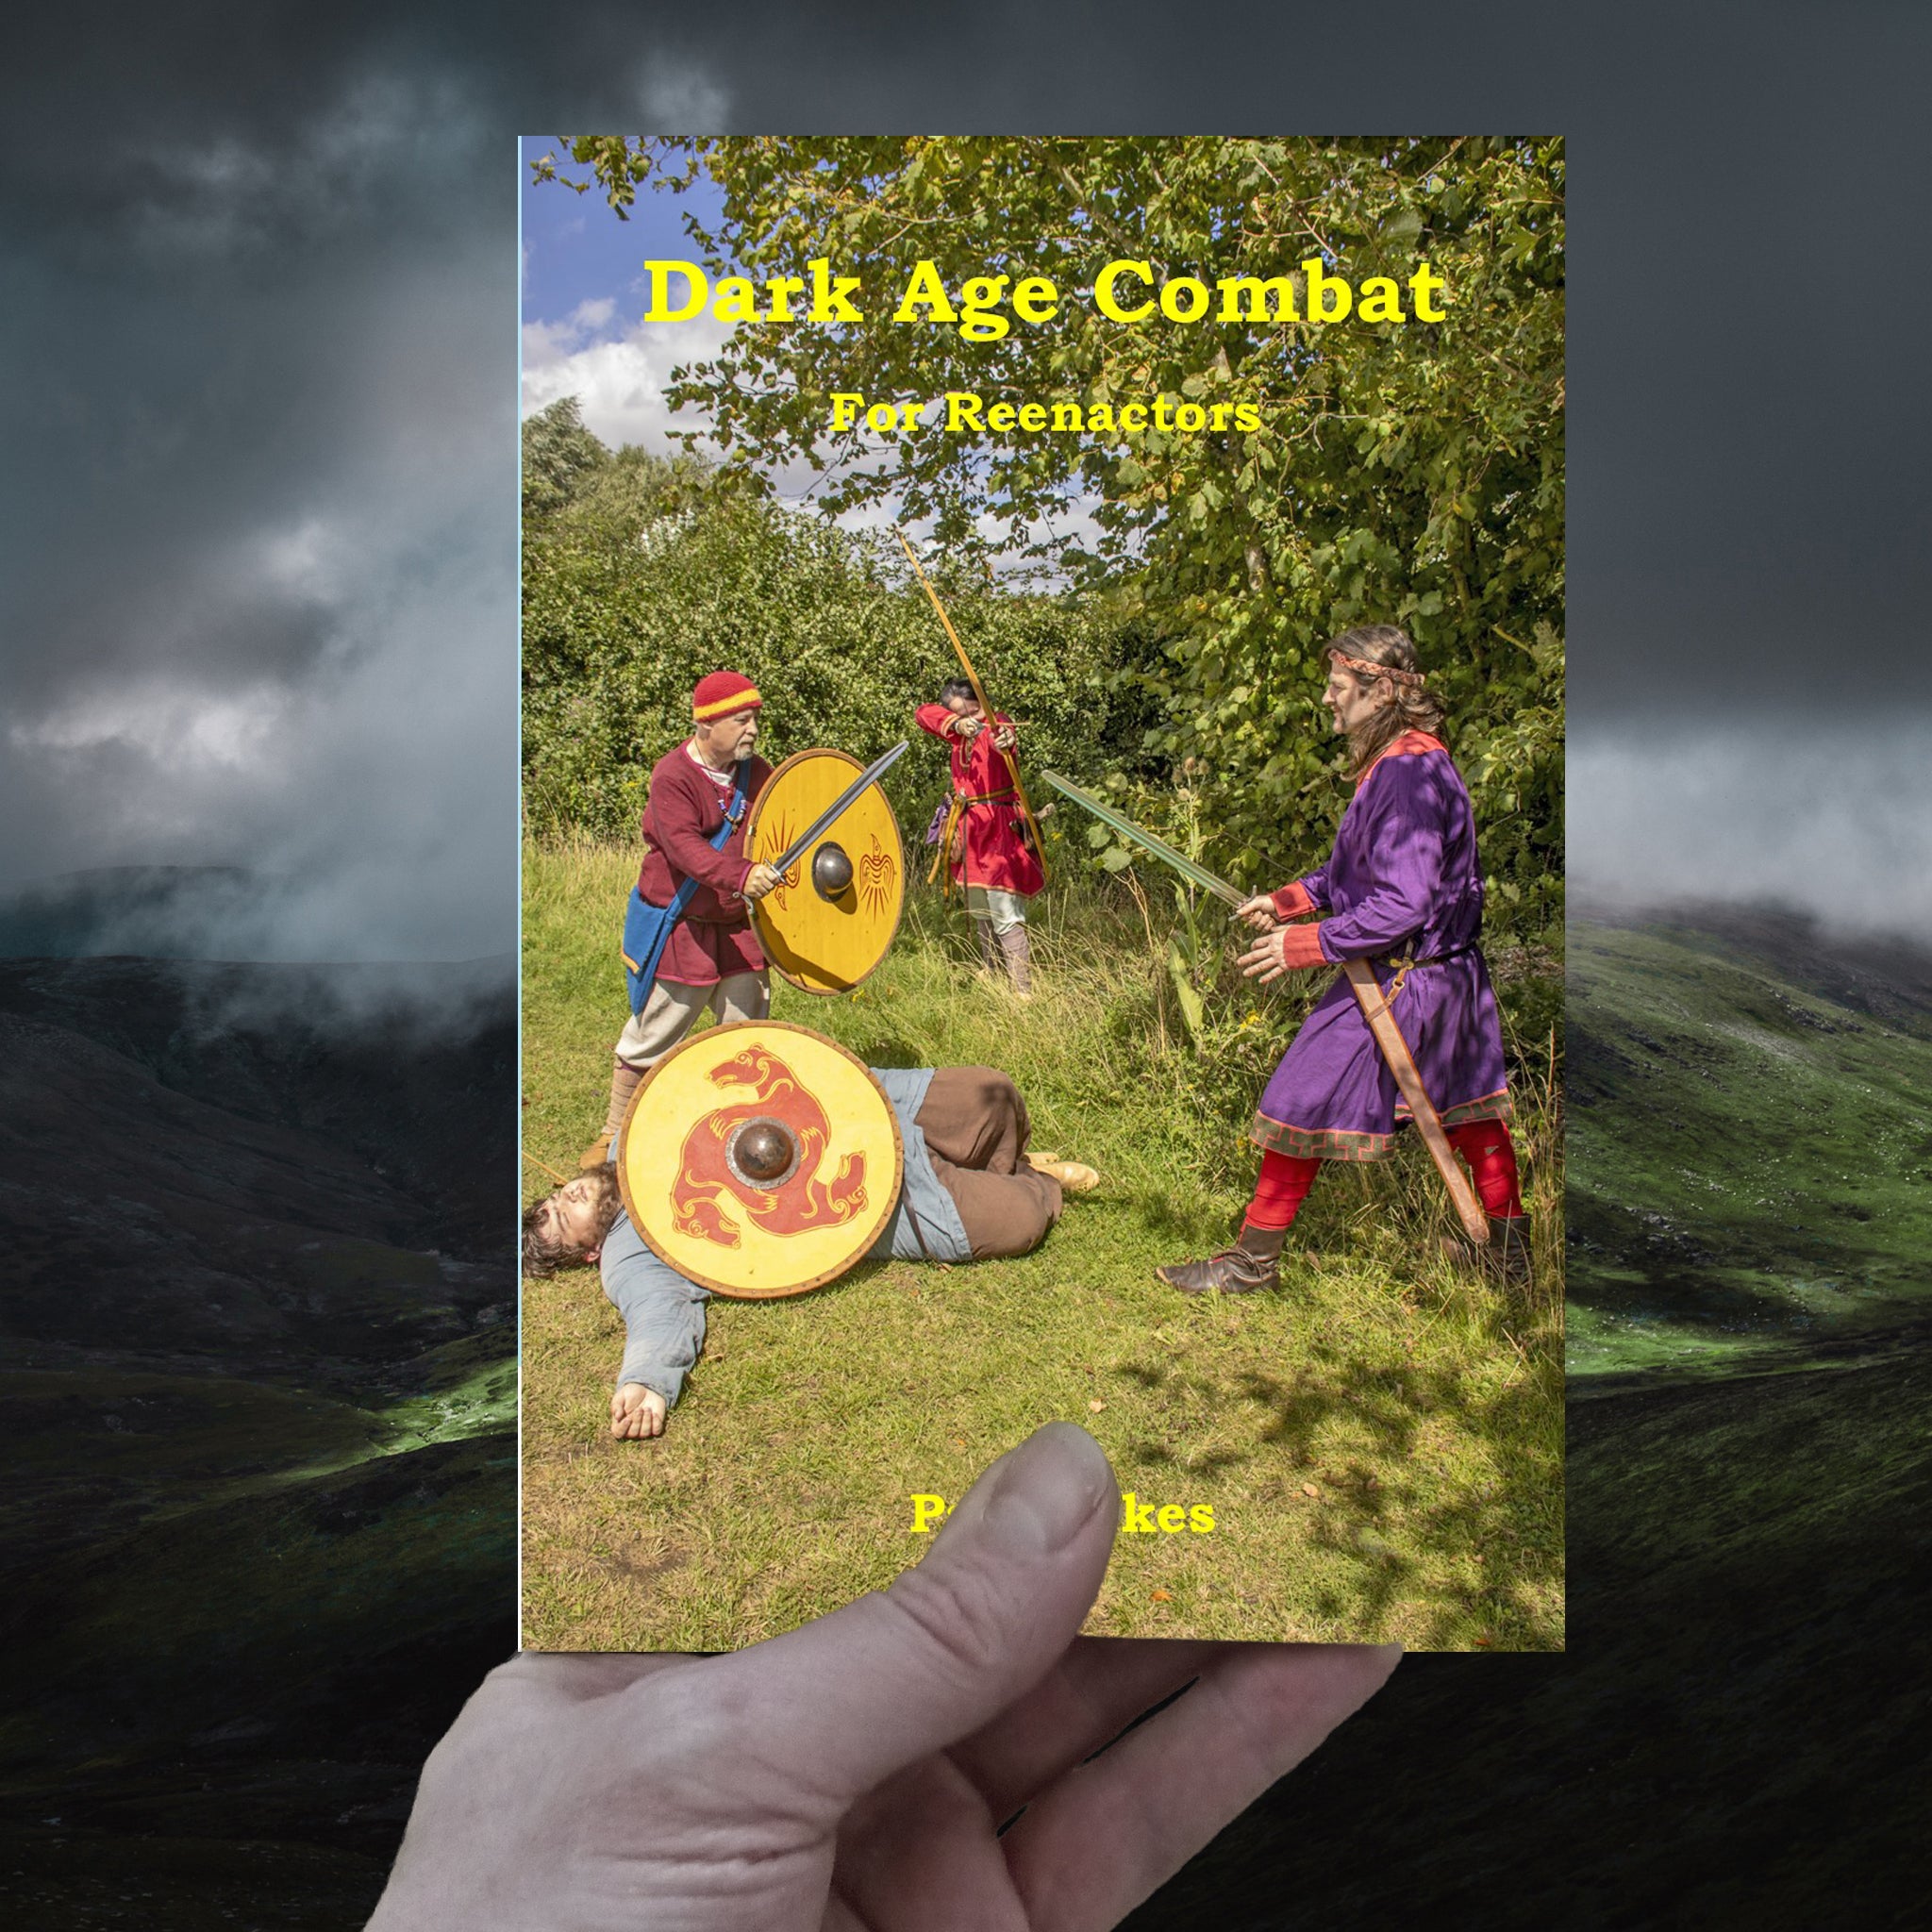 Dark Age Combat For Reenactors - Book - Paul Sykes in Hand